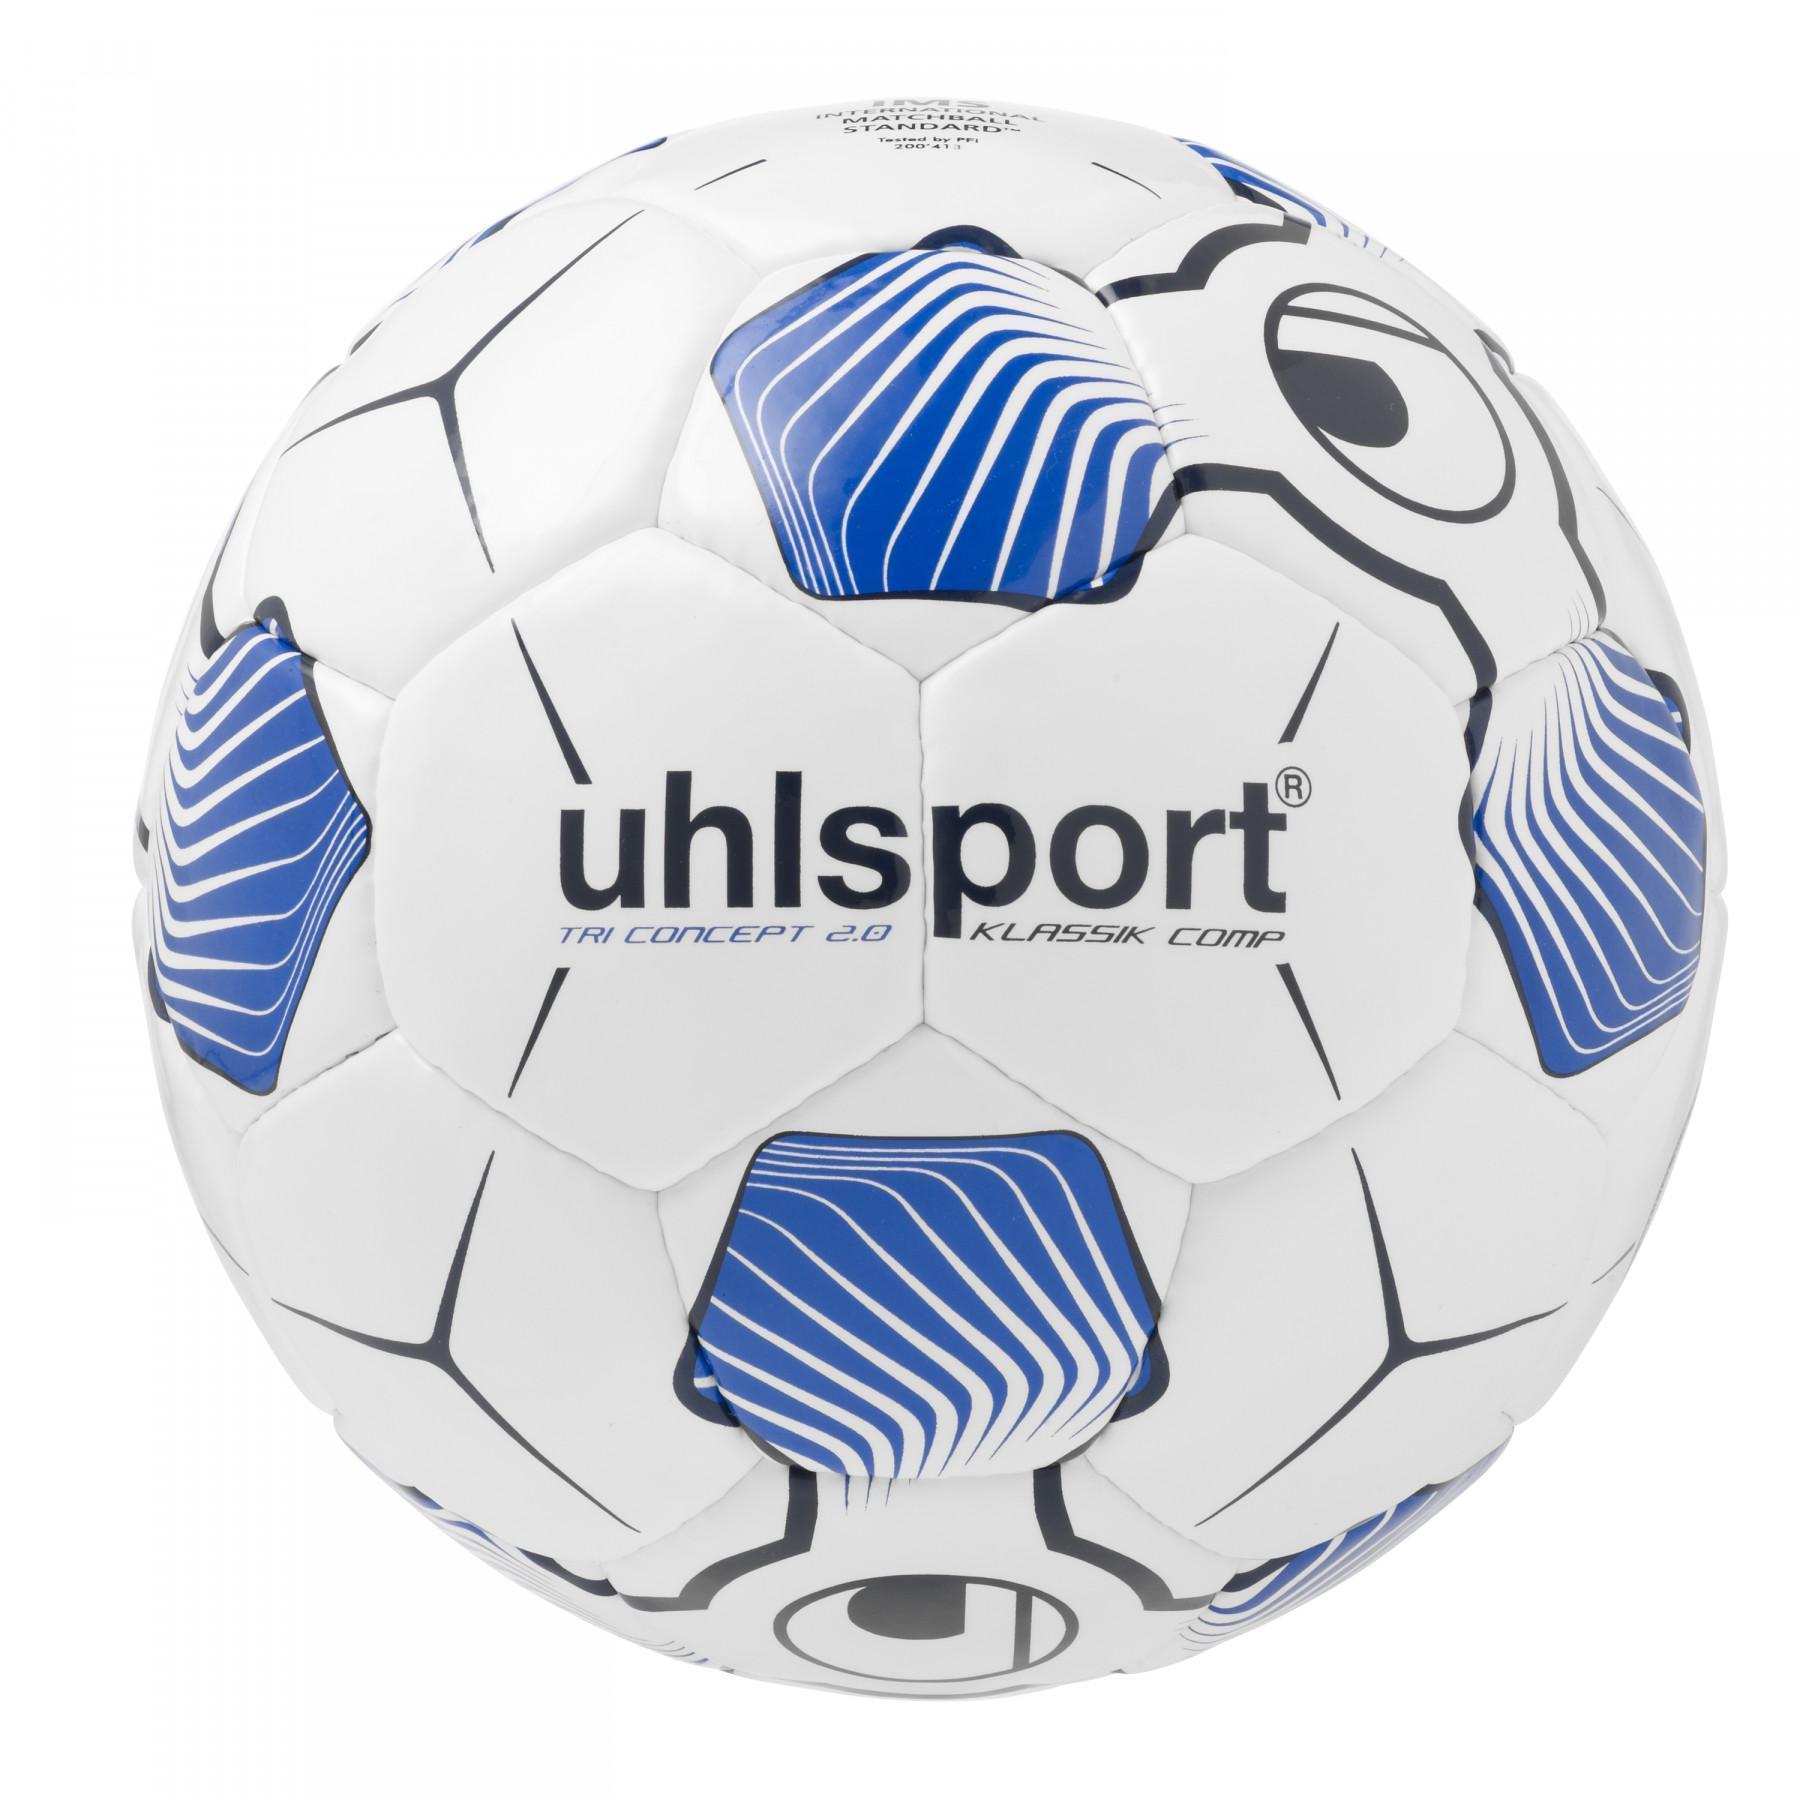 Balão Uhlsport Tri Concept 2.0 Klassik Comp